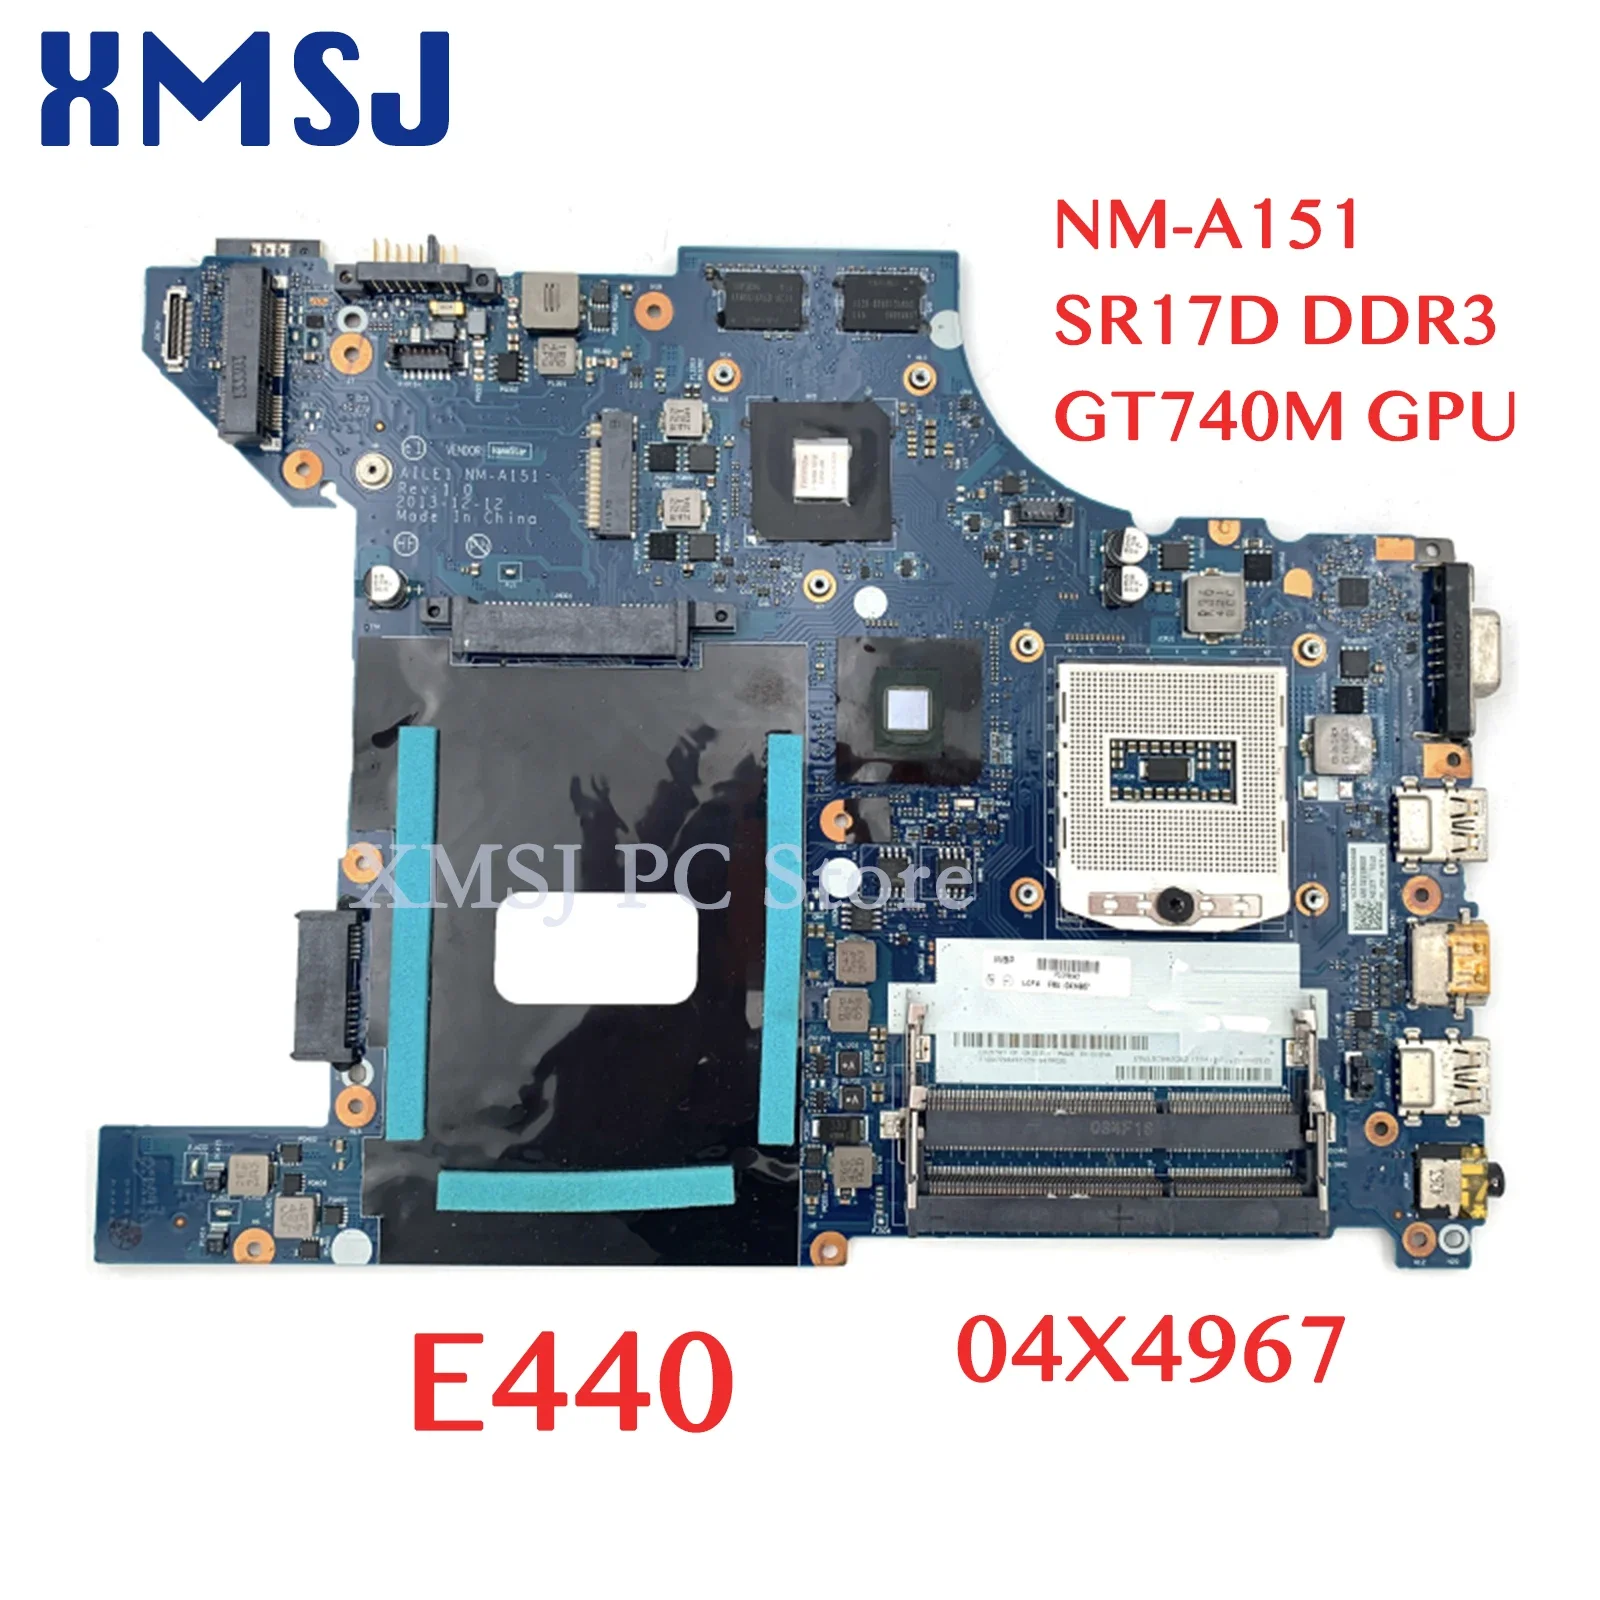 

XMSJ For LENOVO Thinkpad E440 NM-A151 SR17D 04X4967 Laptop Motherboard DDR3 GT740M GPU Main Board Full Test